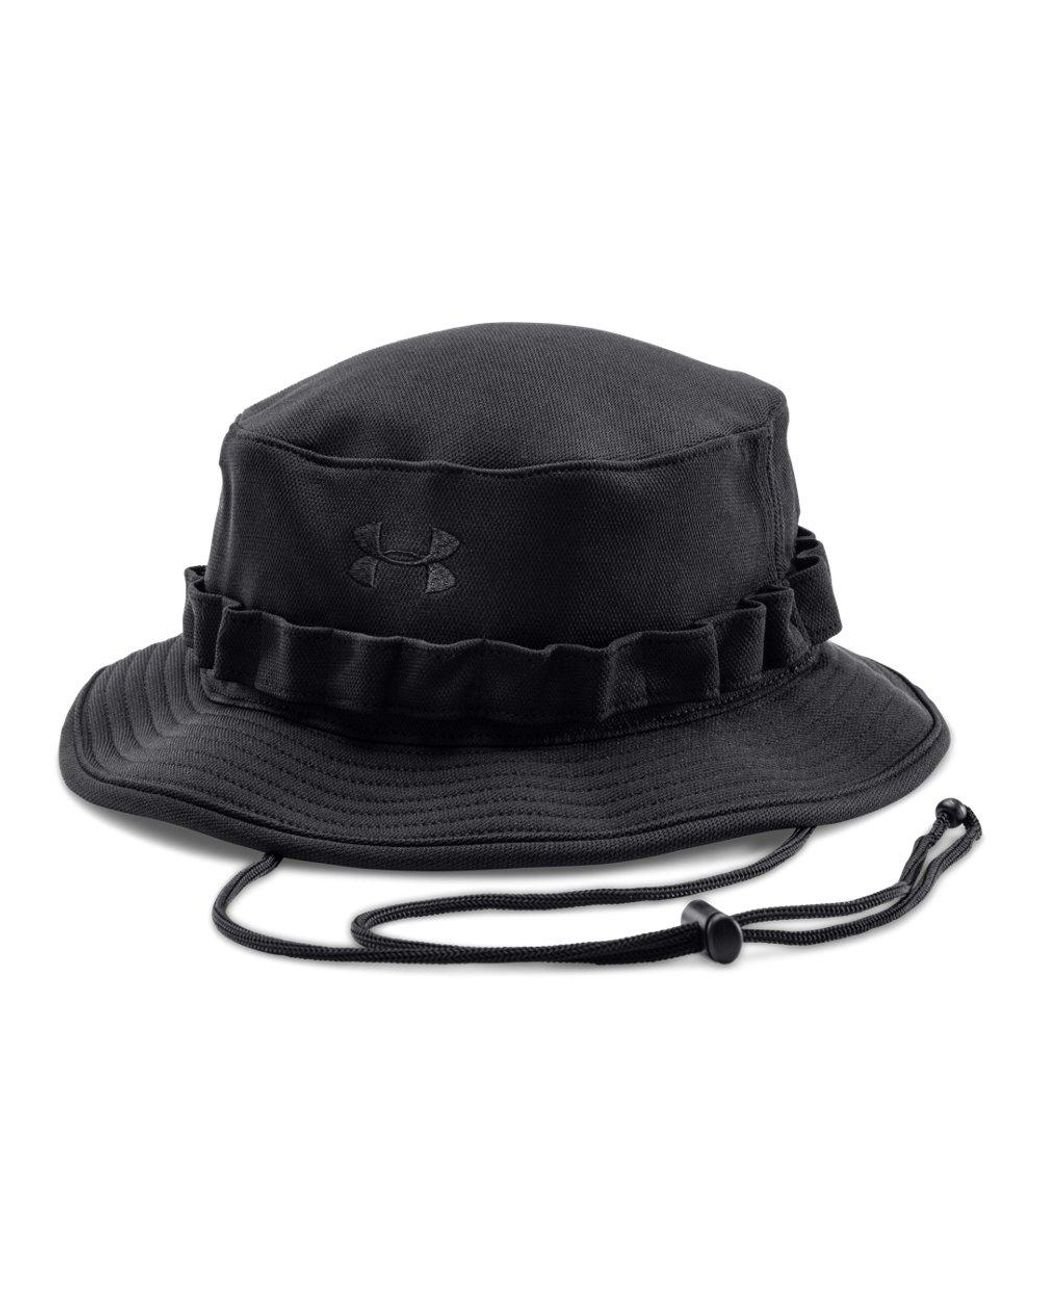 Under Armour Tactical Bucket Hat in Black for Men